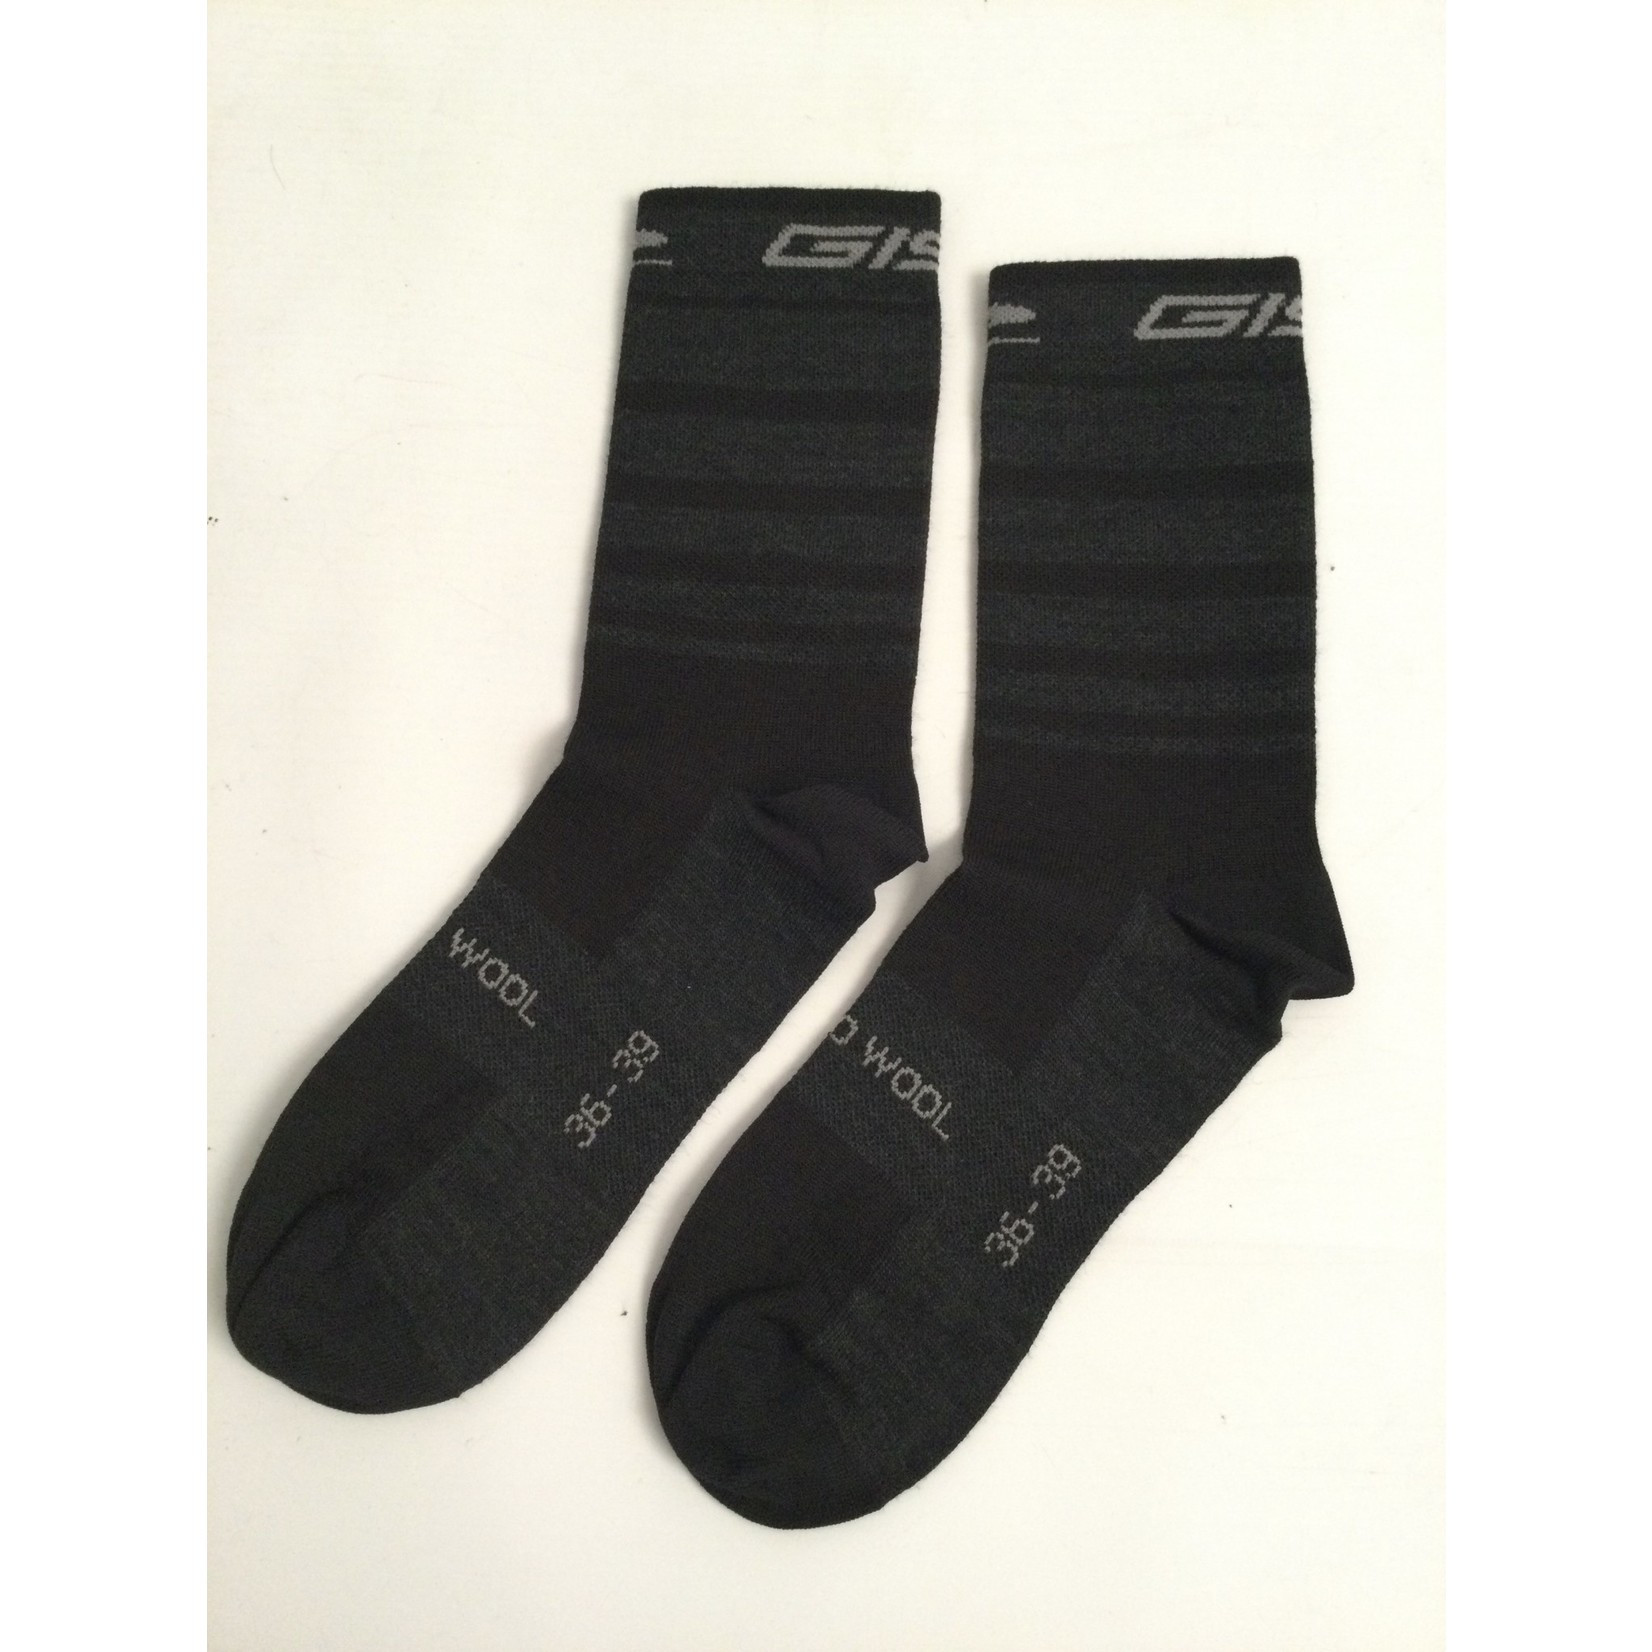 Gist Gist Climatic Socks 5873